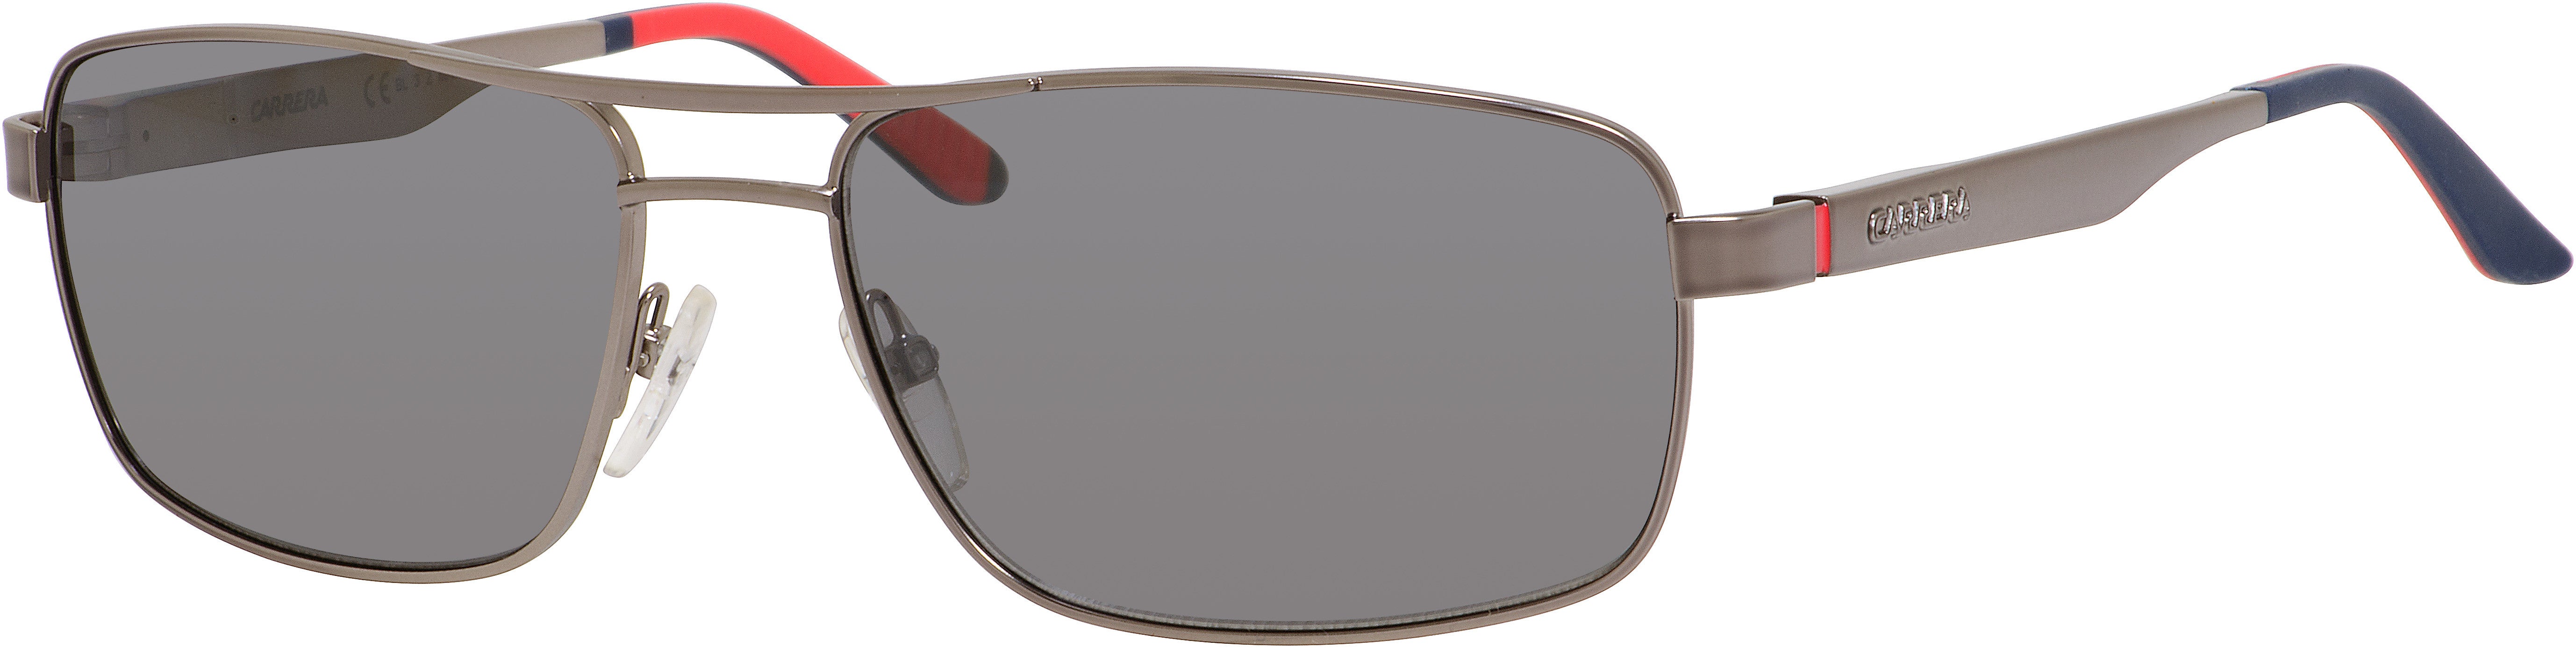  Carrera 8011/S Rectangular Sunglasses 0R81-0R81  Matte Ruthenium (DY Gray Flash Silver Pz)